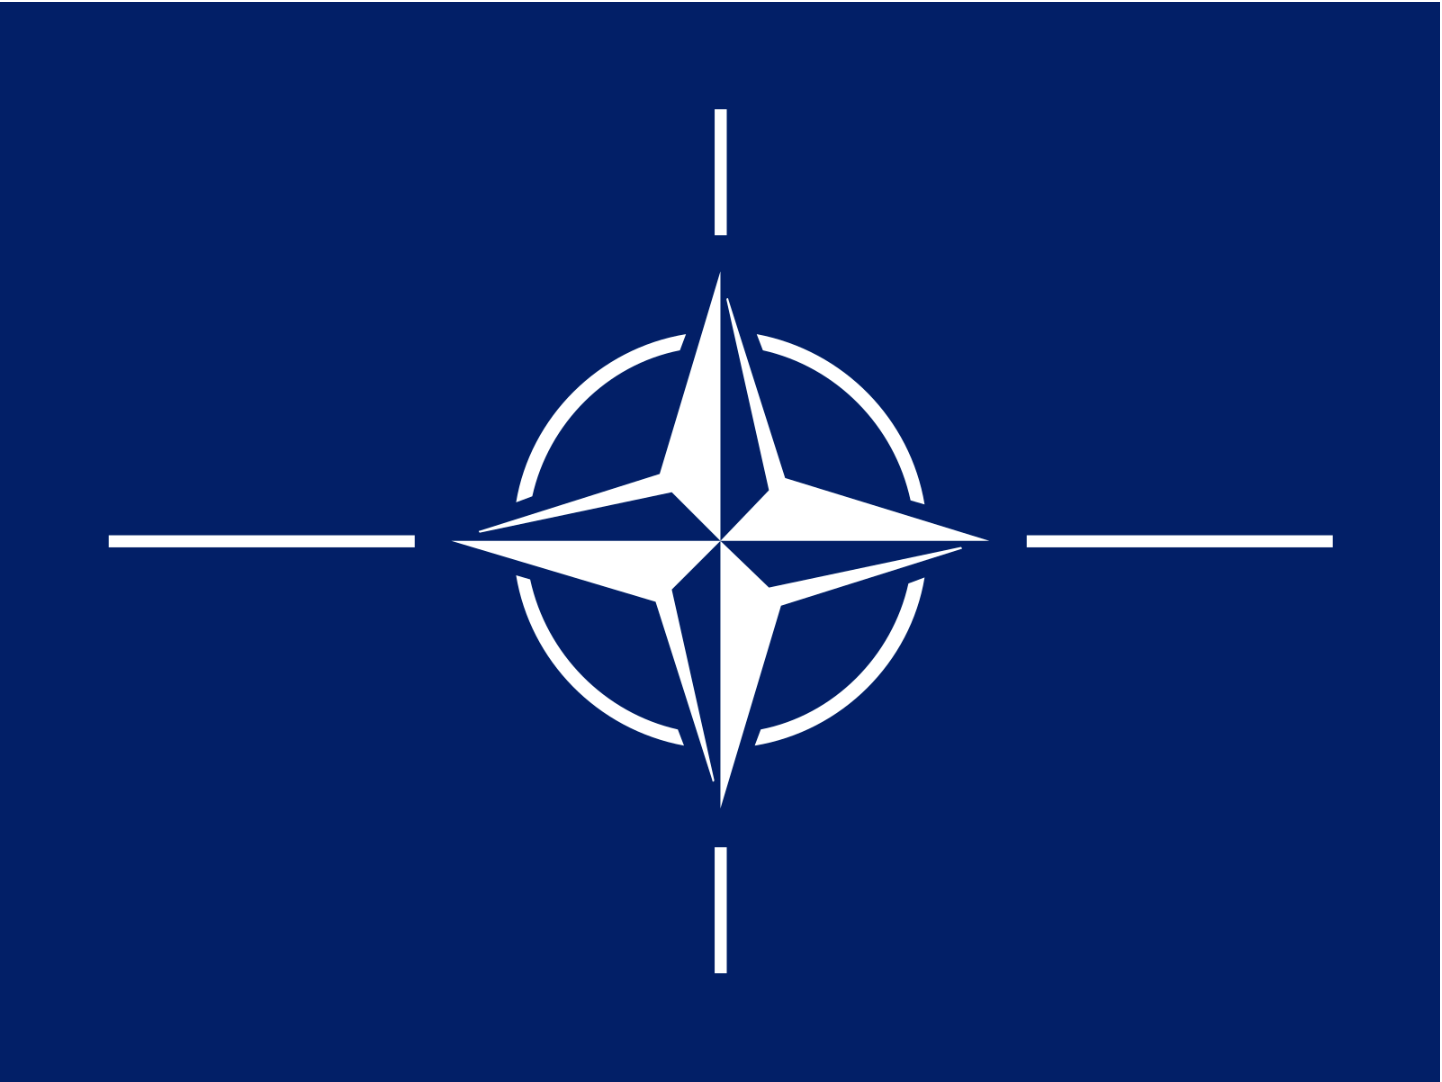 The flag of the North Atlantic Treaty Organization (NATO). Source: Wikimedia Commons, Public domain.